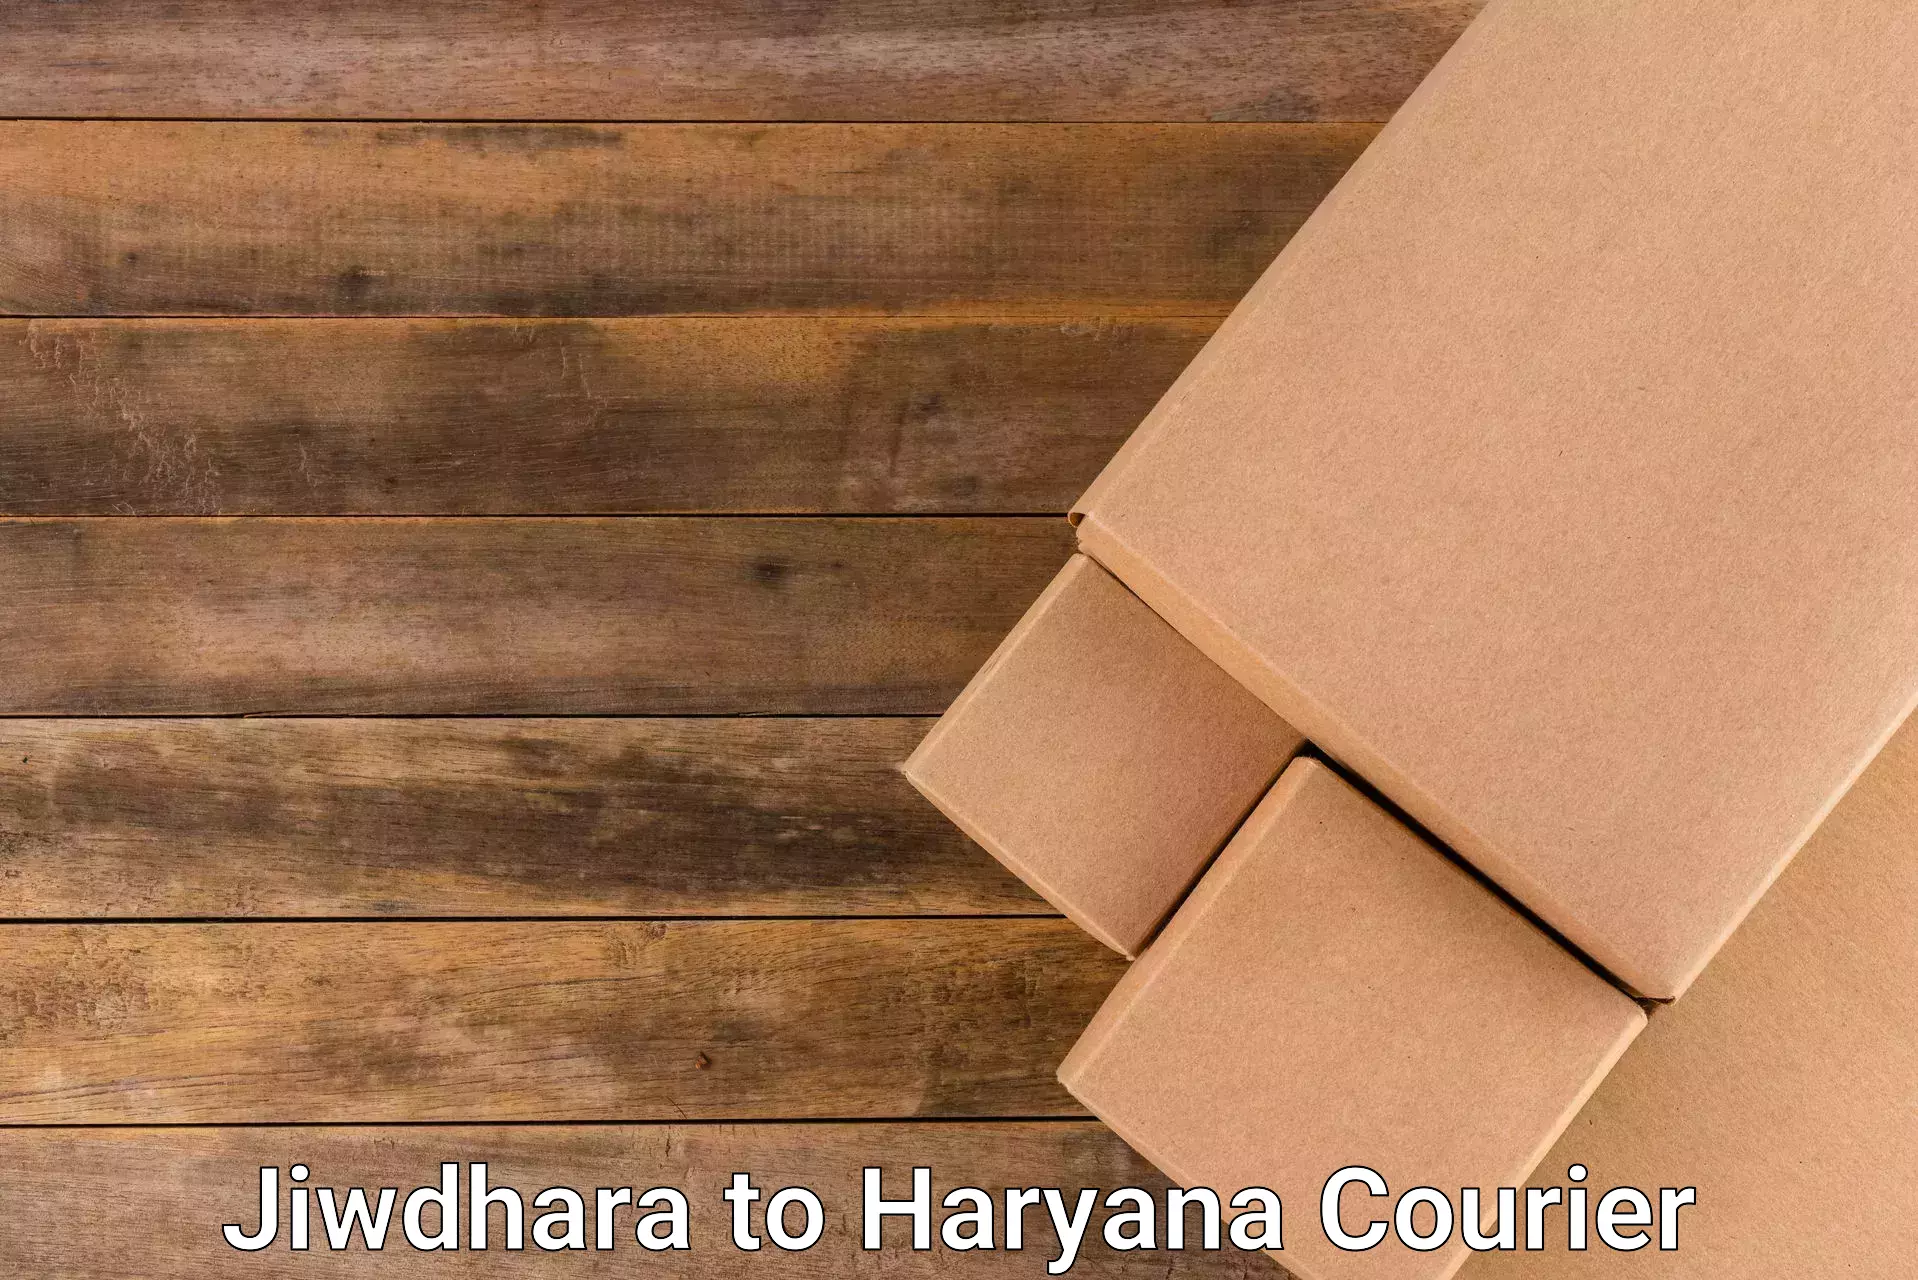 Express package handling in Jiwdhara to Haryana